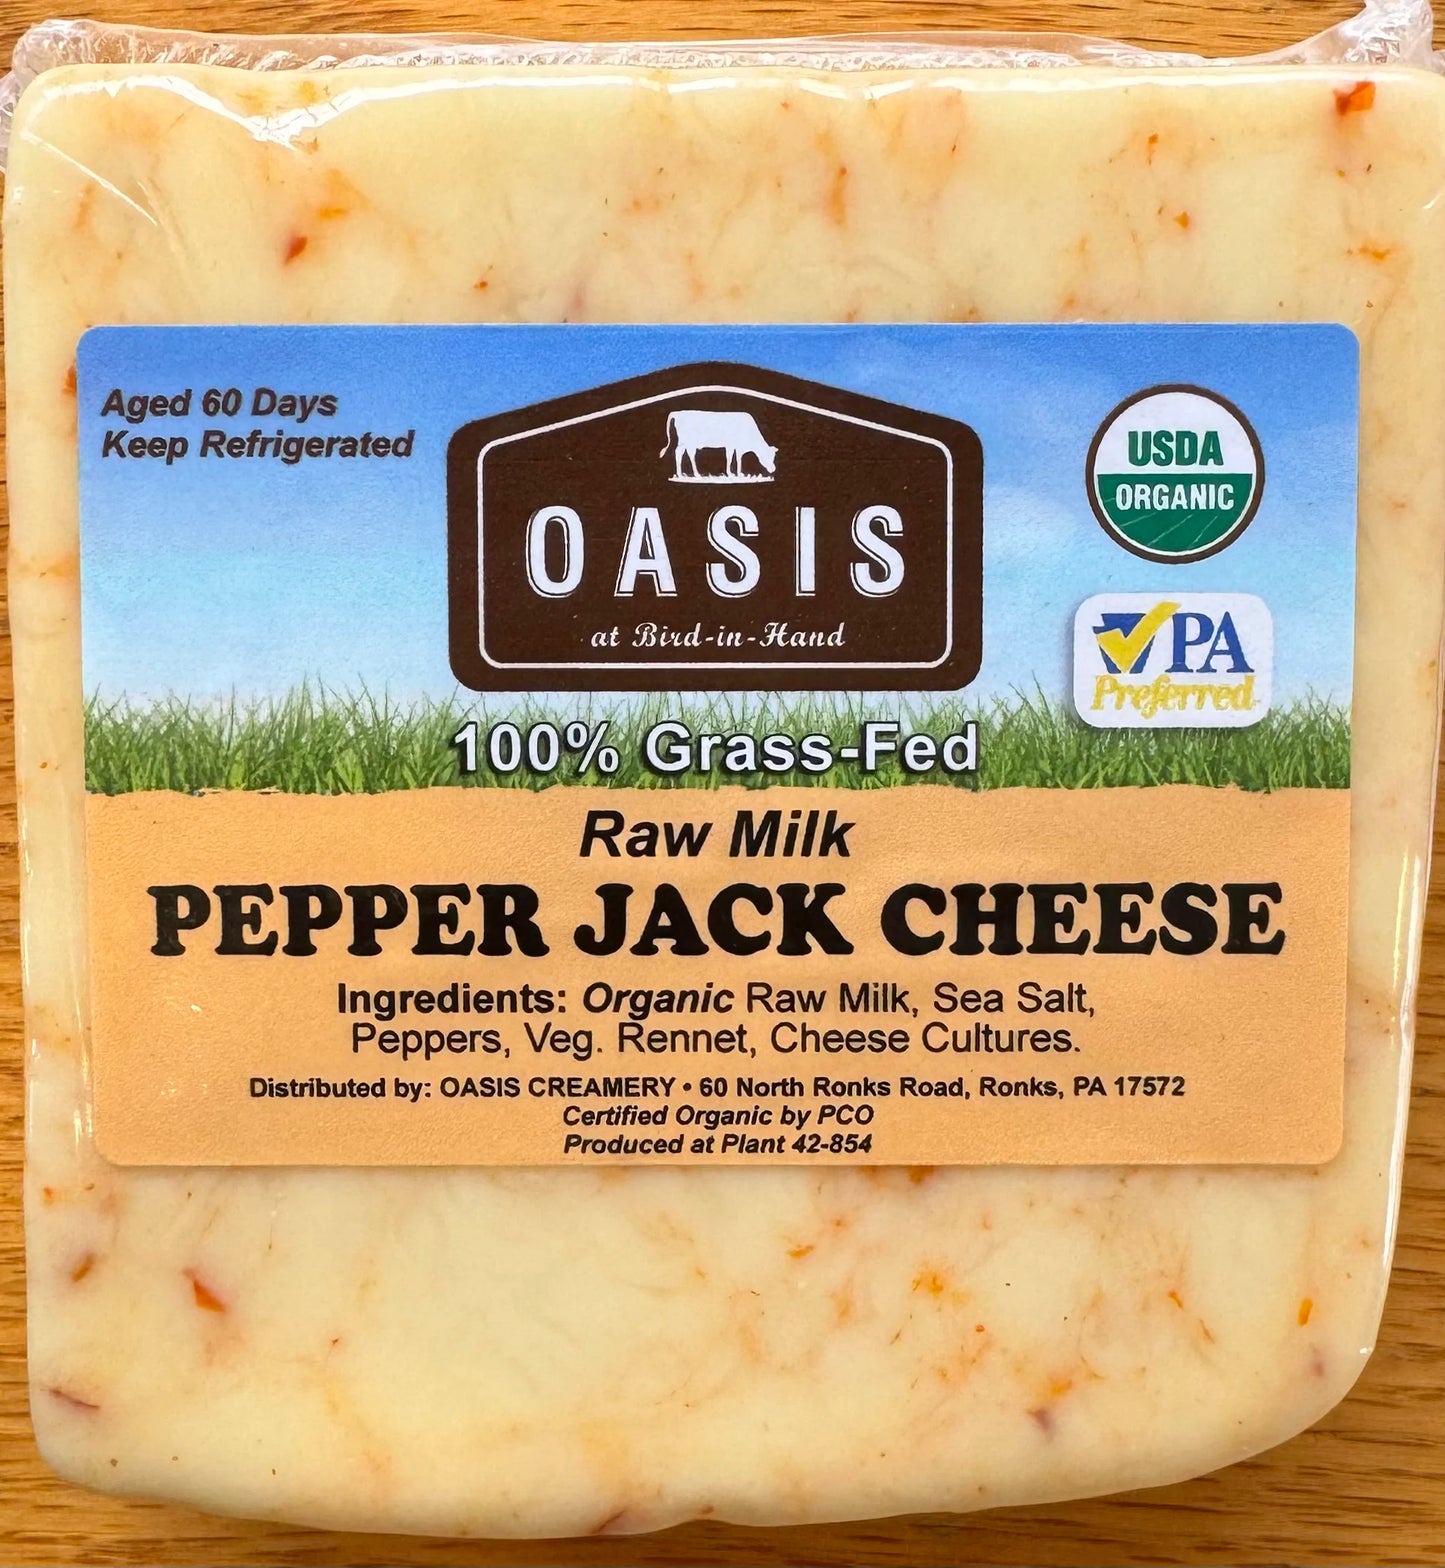 Pepper Jack cheese